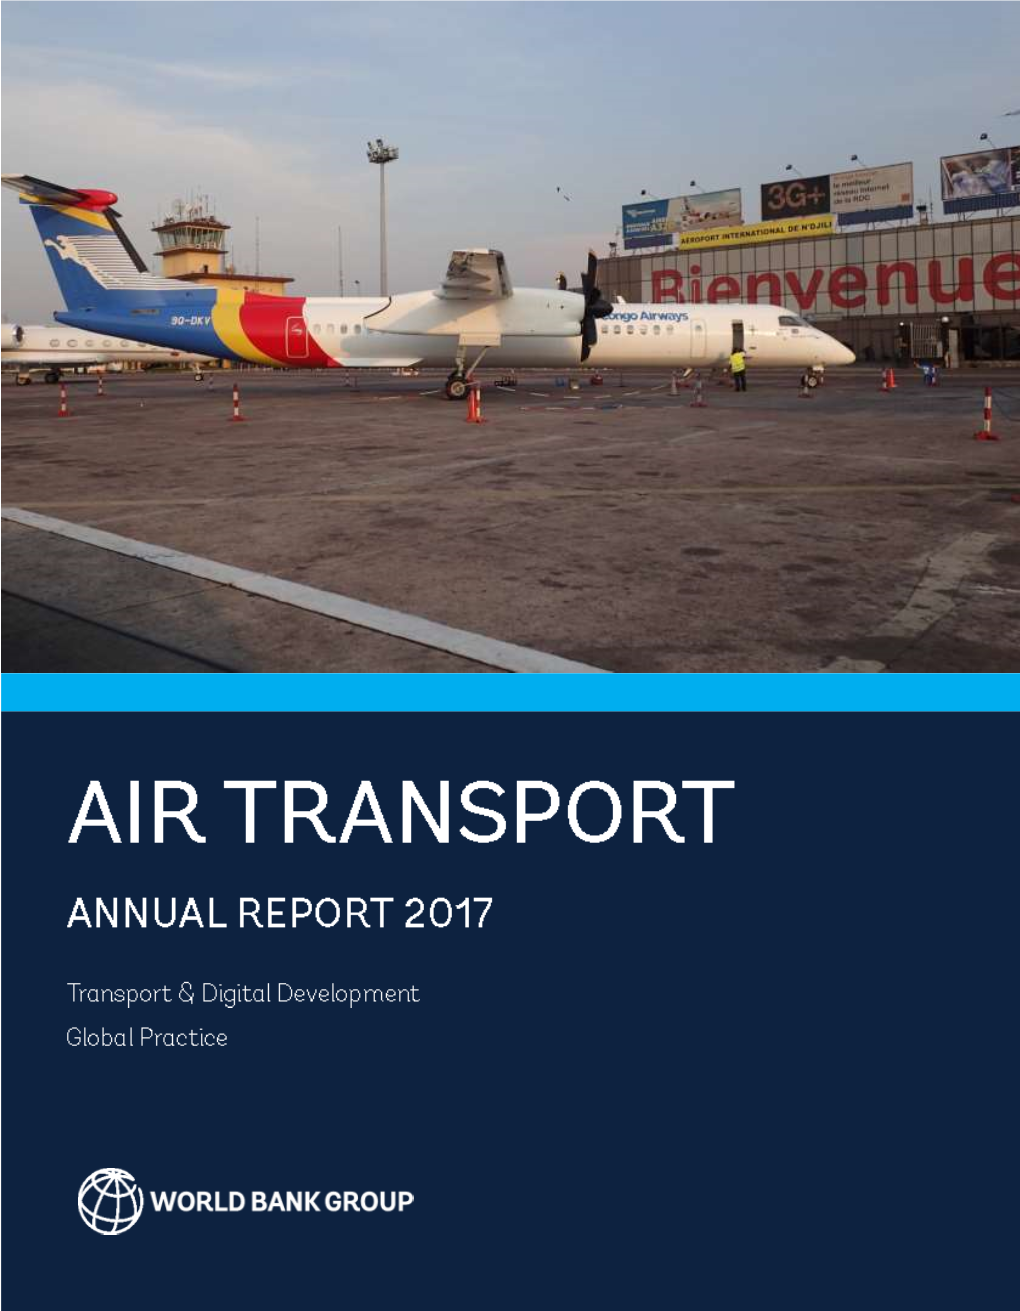 WBG-Air Transport Annual Report 2017.Pdf